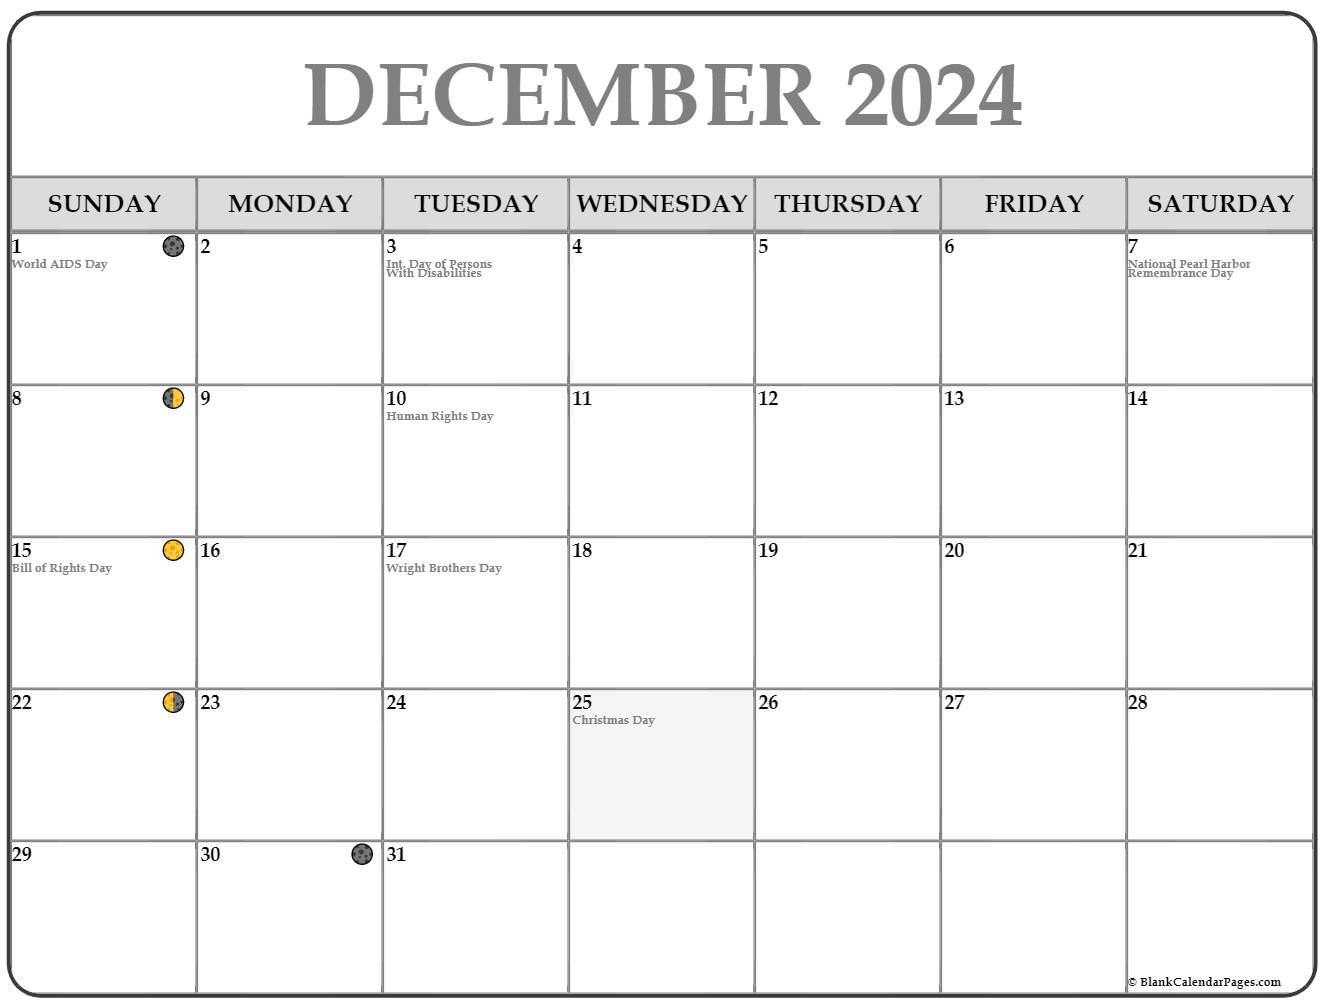 2024 Lunar Calendar With Holidays Online Filing Tilly Ginnifer